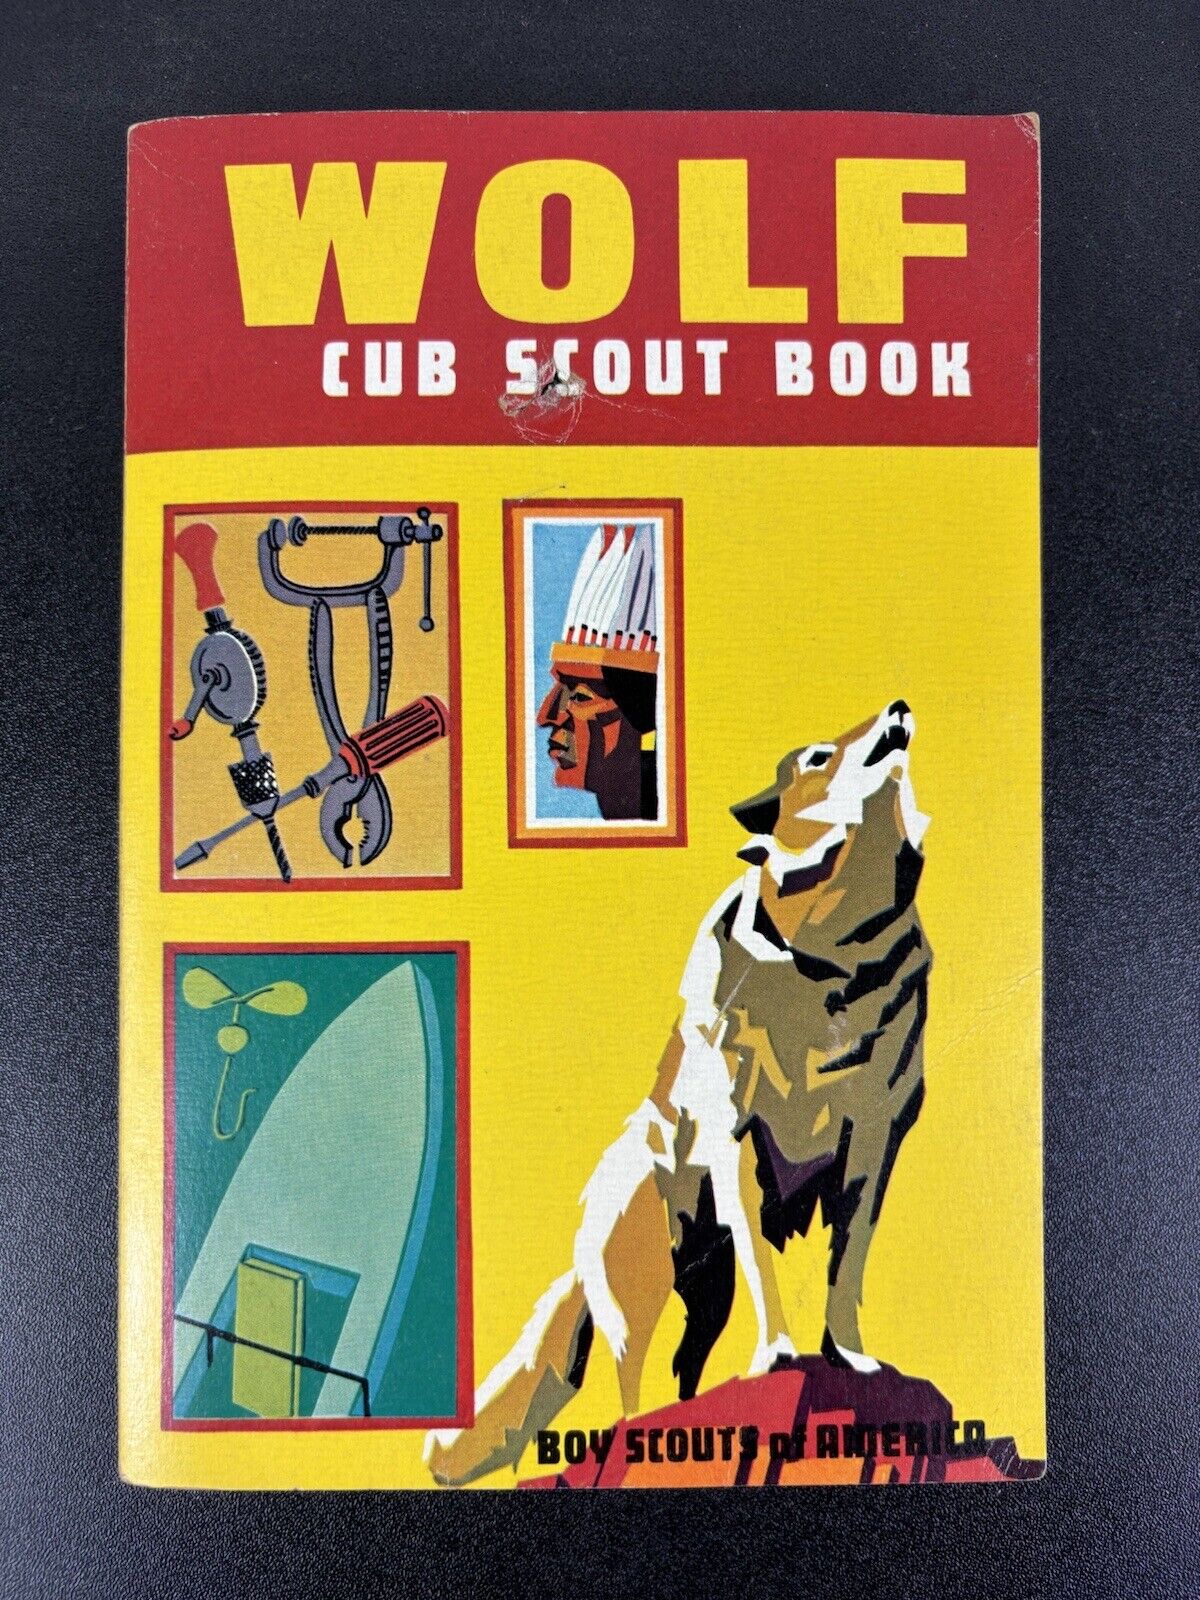 1970 WOLF CUB SCOUT BOOK Boy Scouts of America Paperback B.S.A.